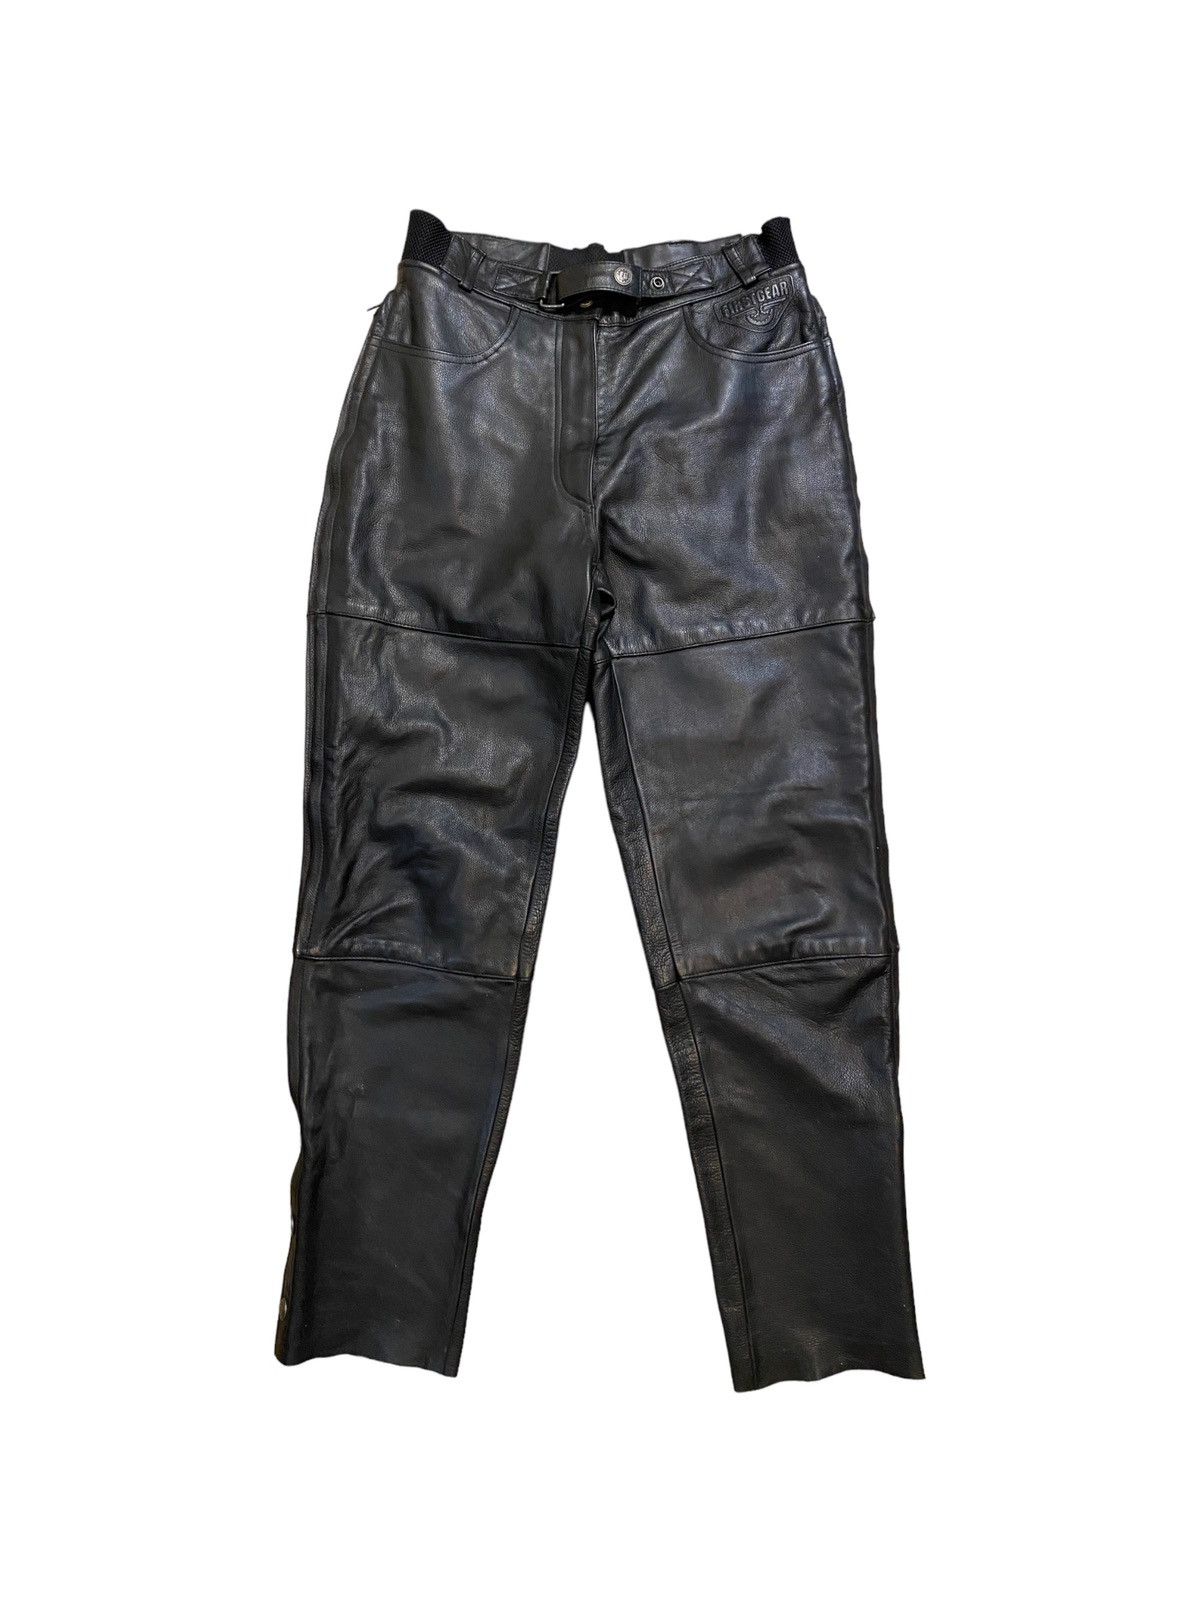 Vintage Harley Davidson Black Leather Pants Size Womens 38/10